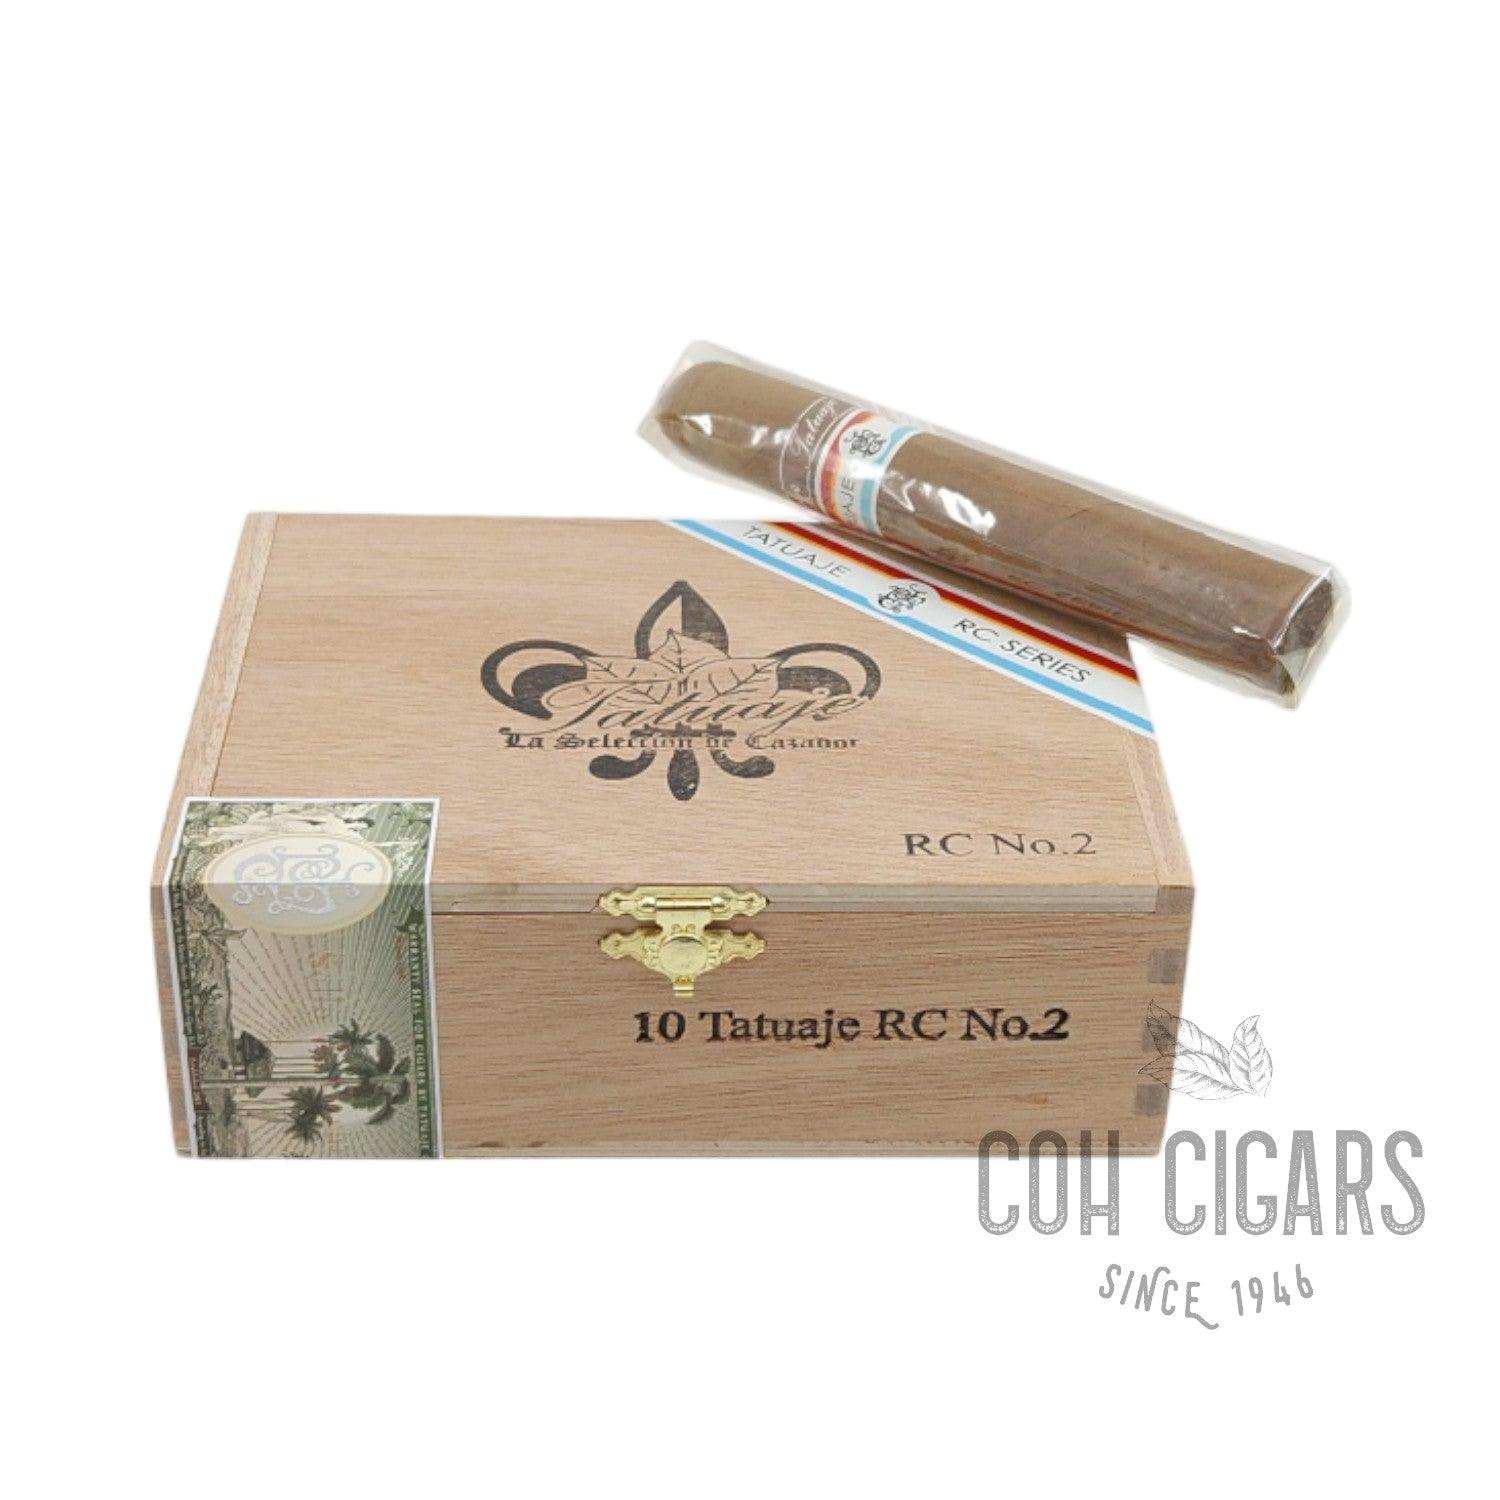 Tatuaje Cigar | La Seleccion De Cazabor RC No.2 | Box 10 - HK CohCigars